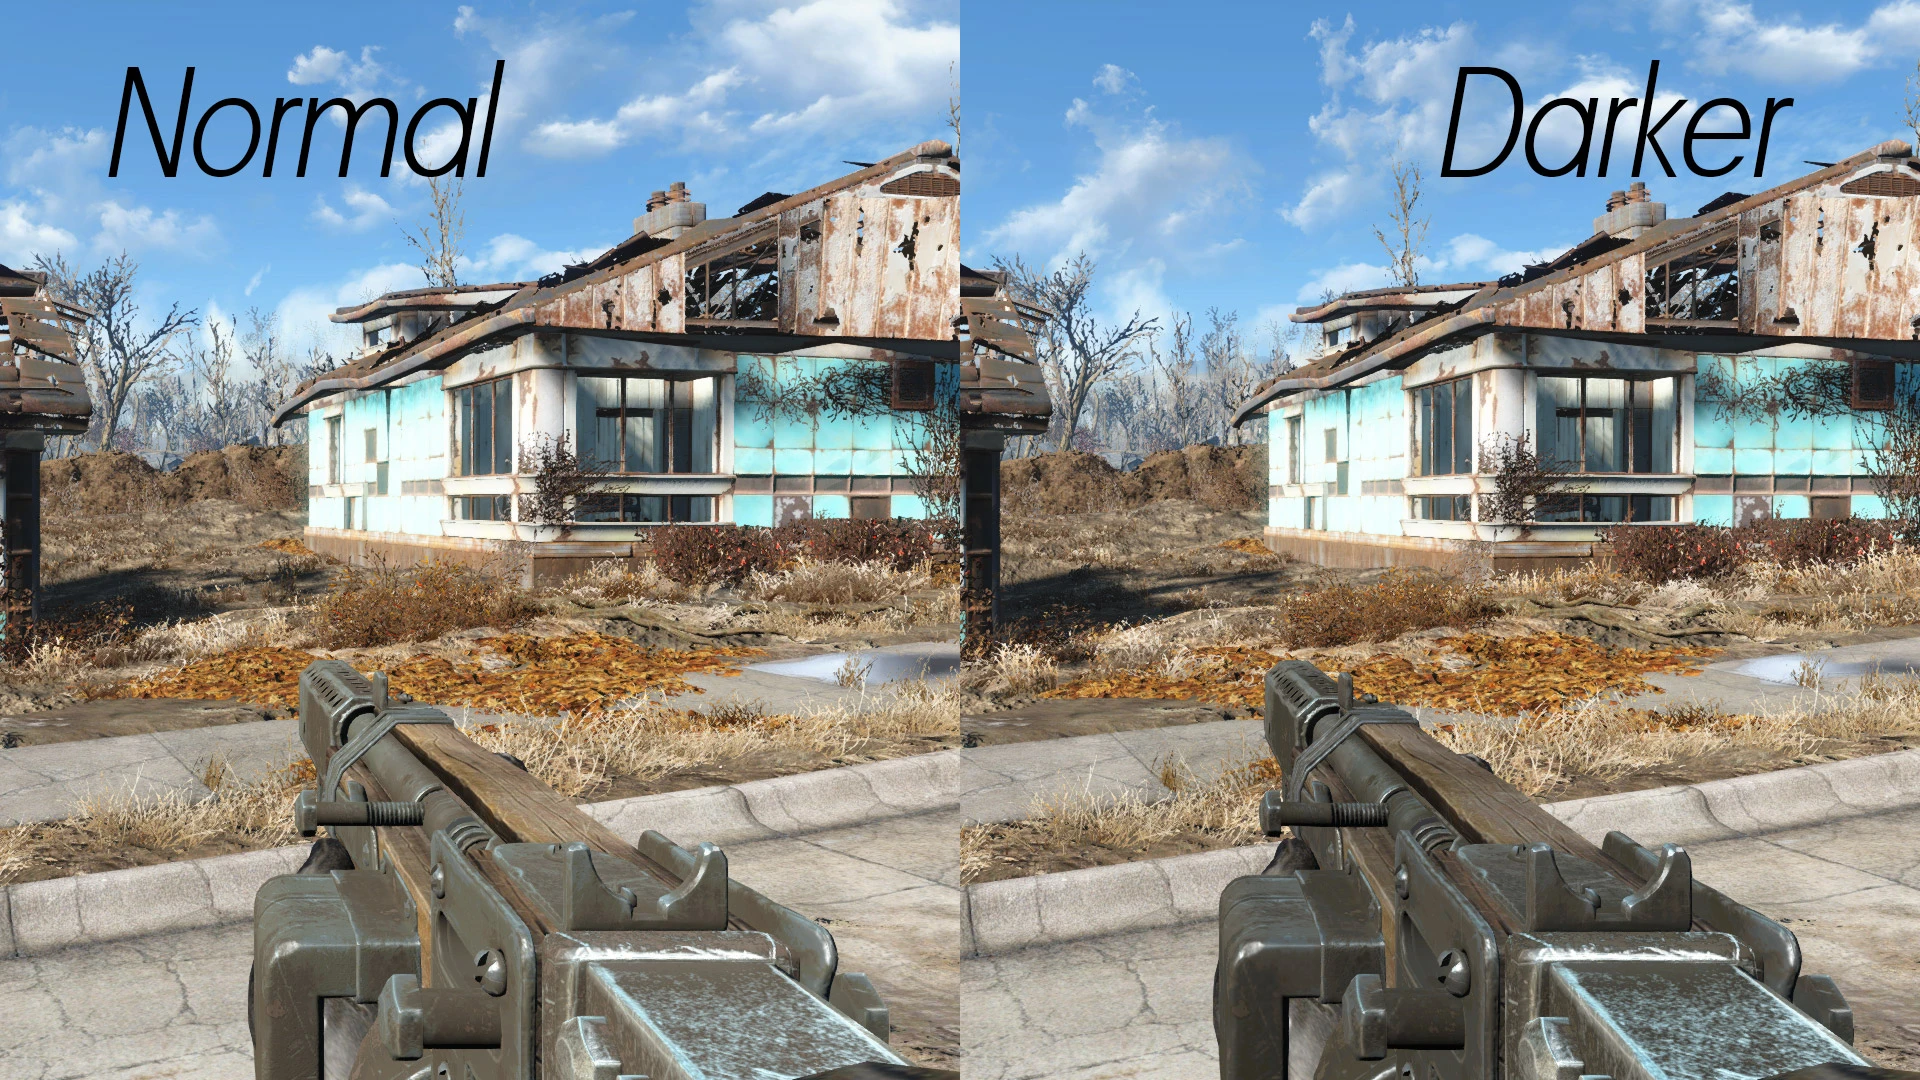 fallout 4 realism overhaul